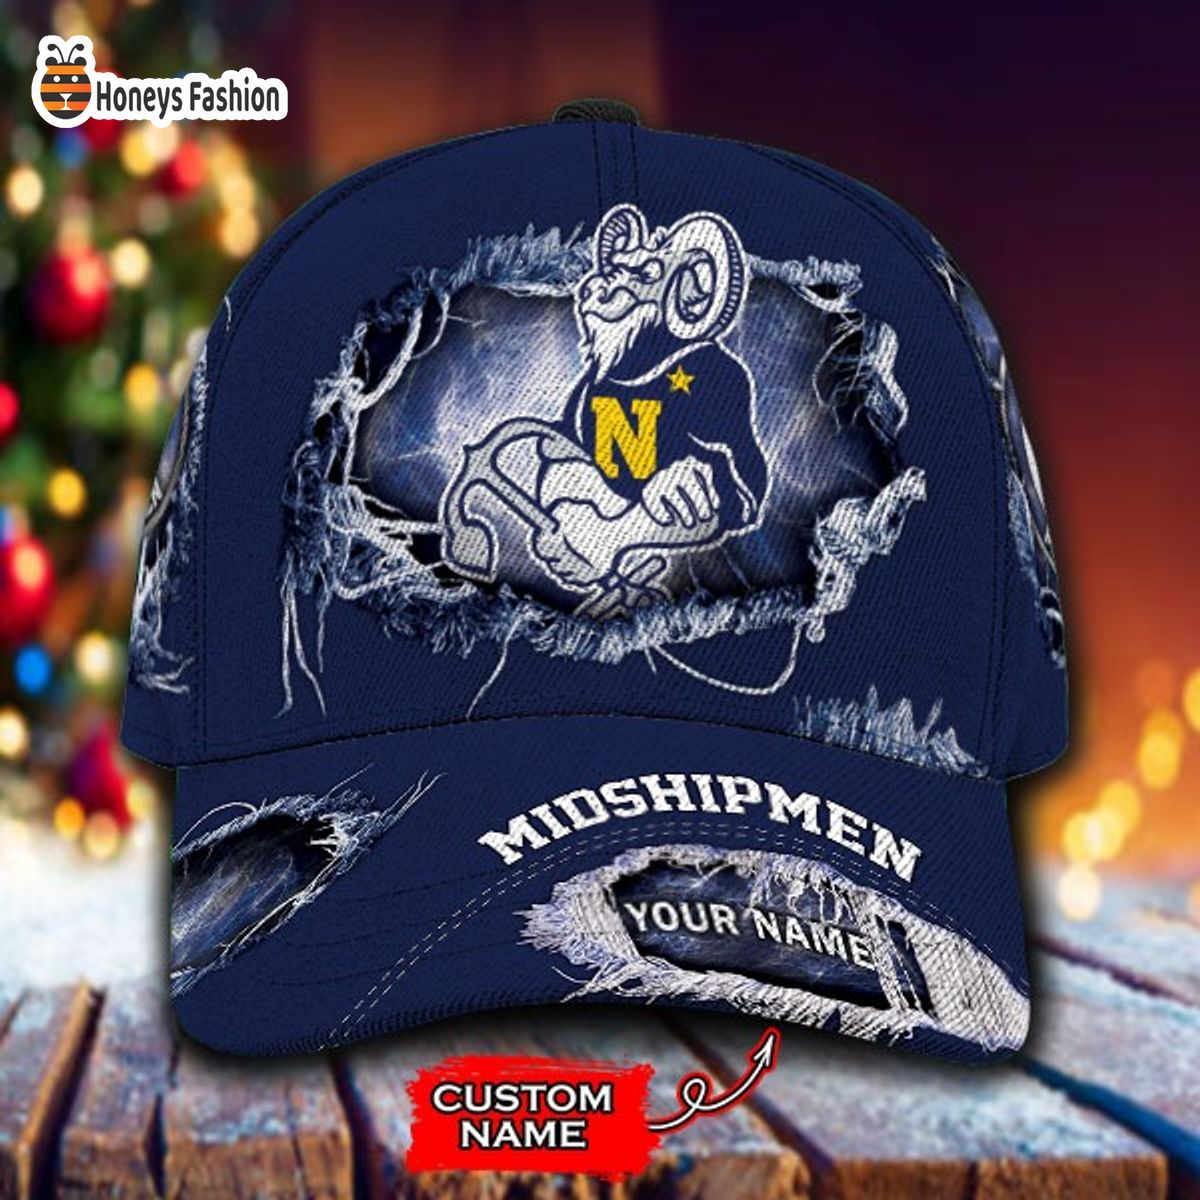 Navy Midshipmen NCAA Custom Name Classic Cap